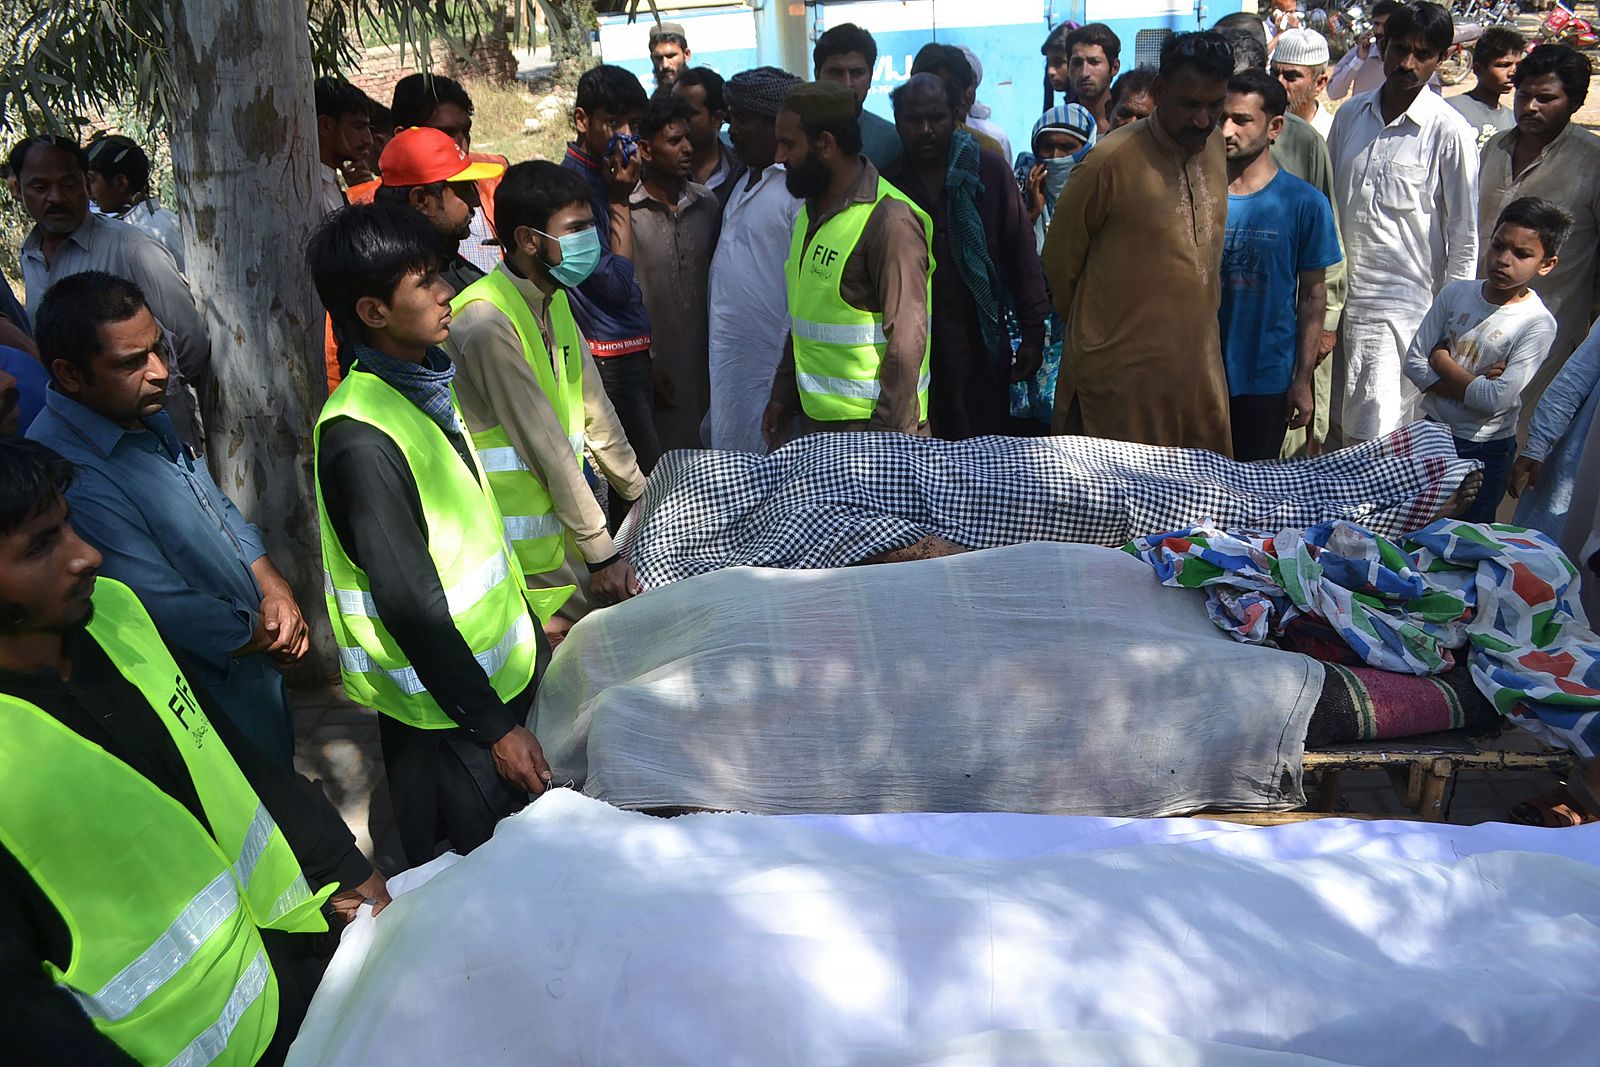 Un perturbado asesina al menos a 20 personas en un templo de Pakistán